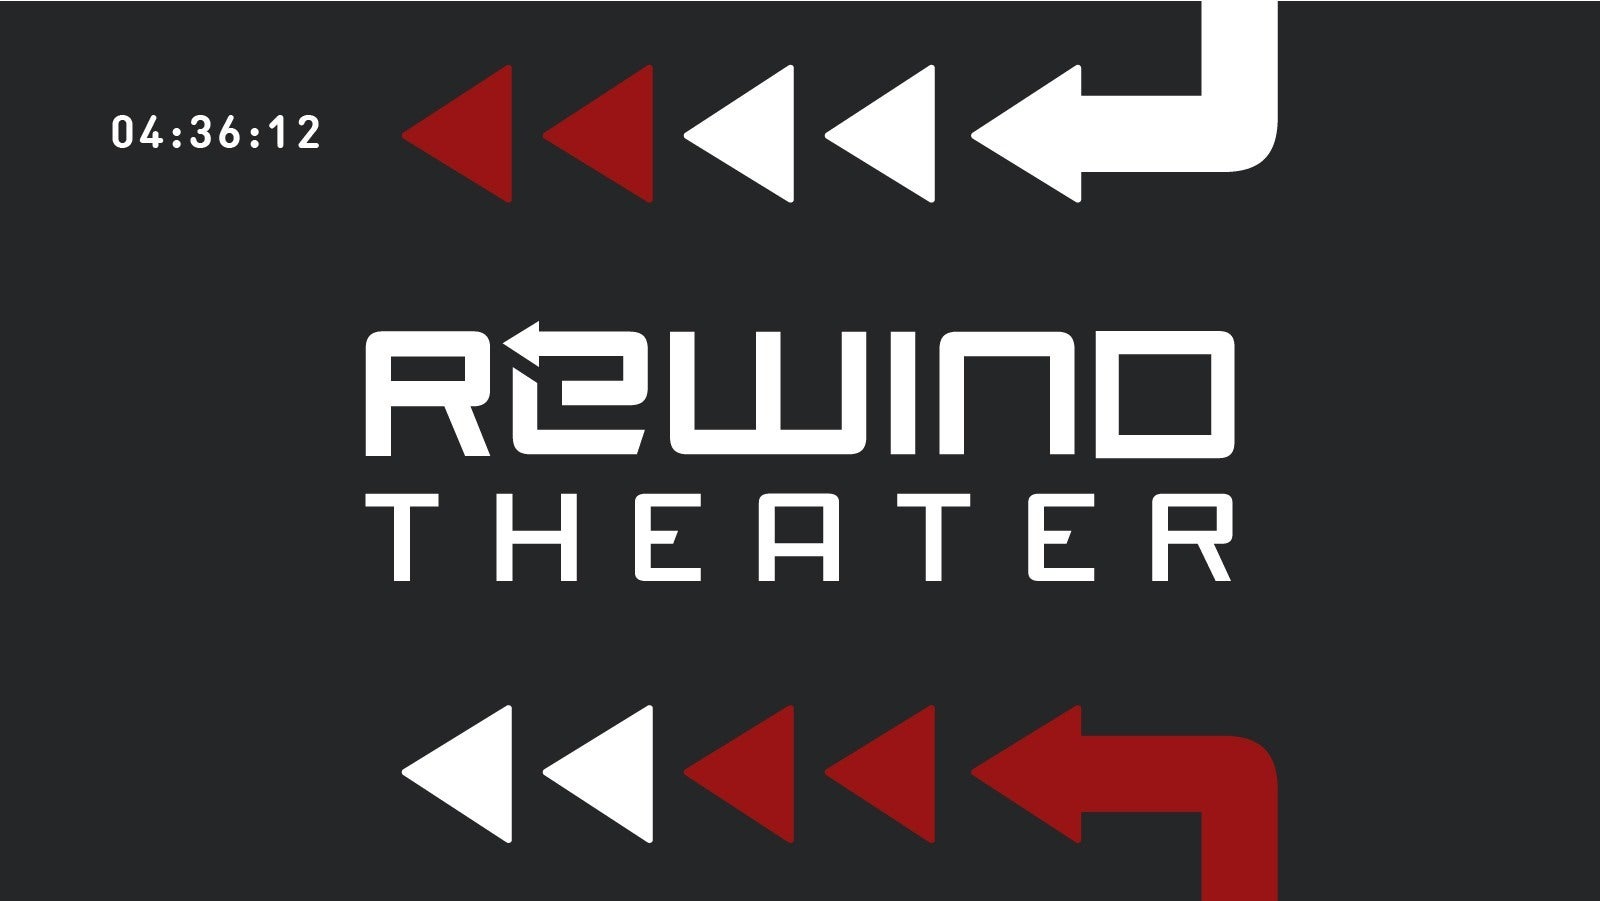 IGN Rewind Theater